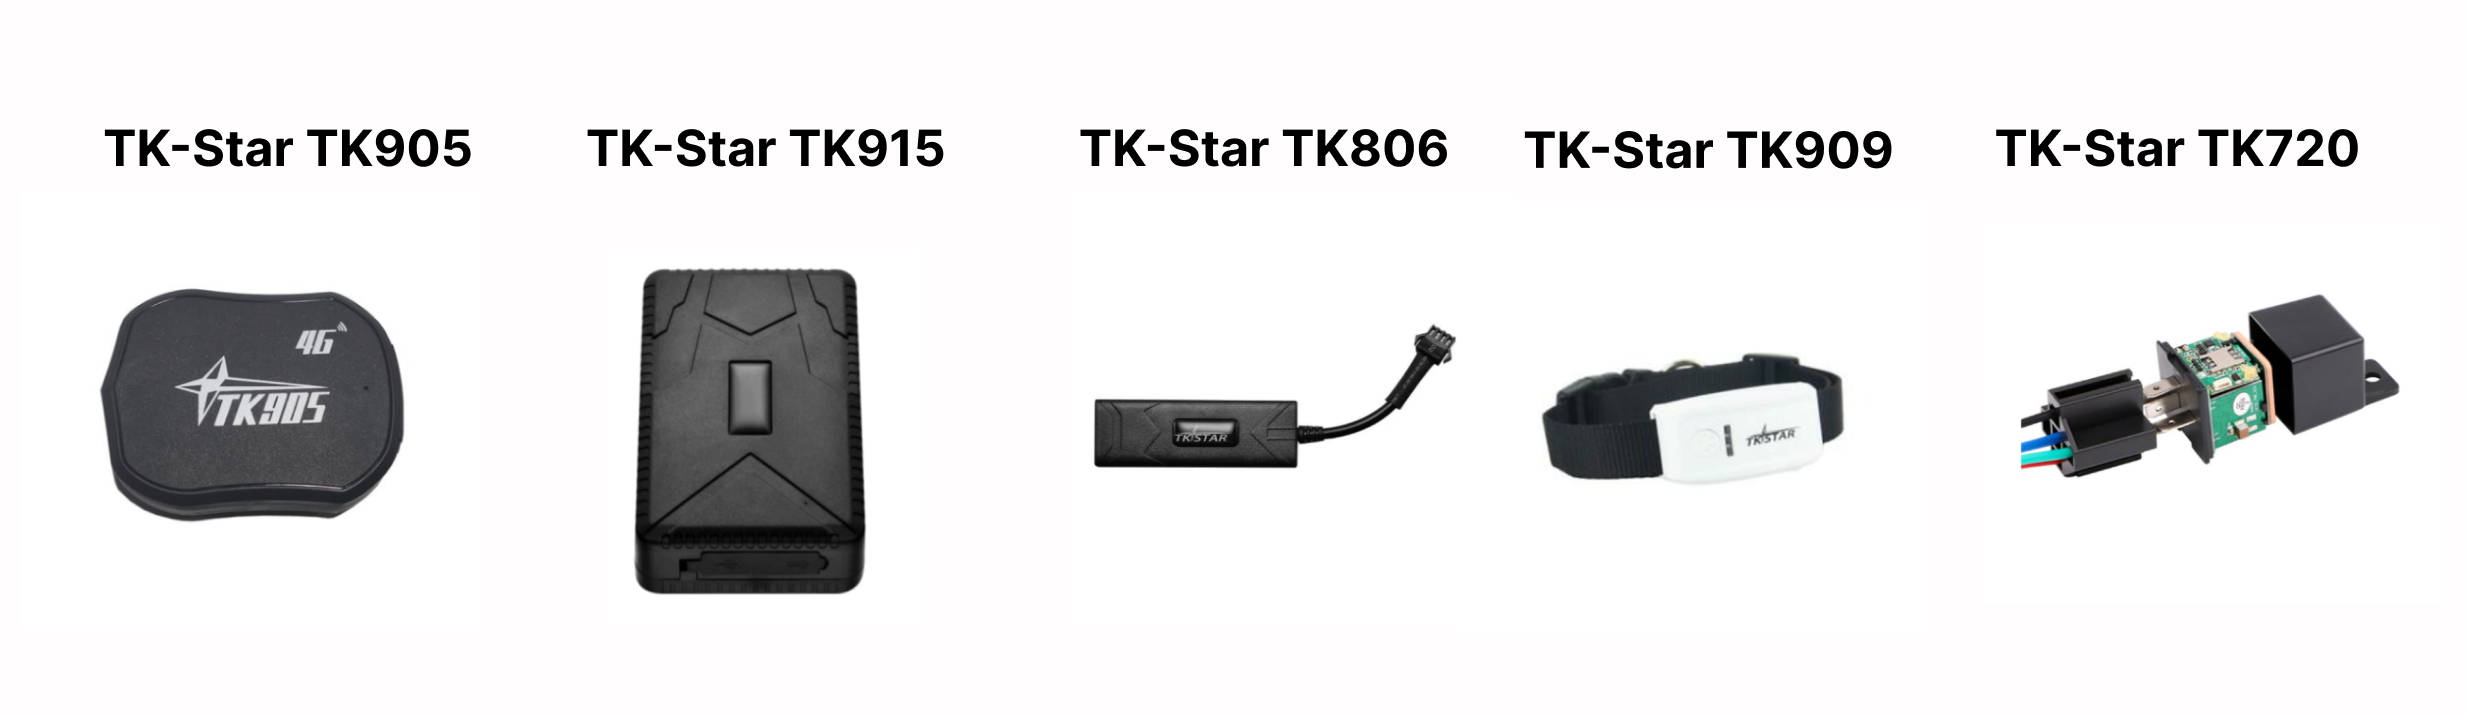 Tk Star GPS Rastreadores